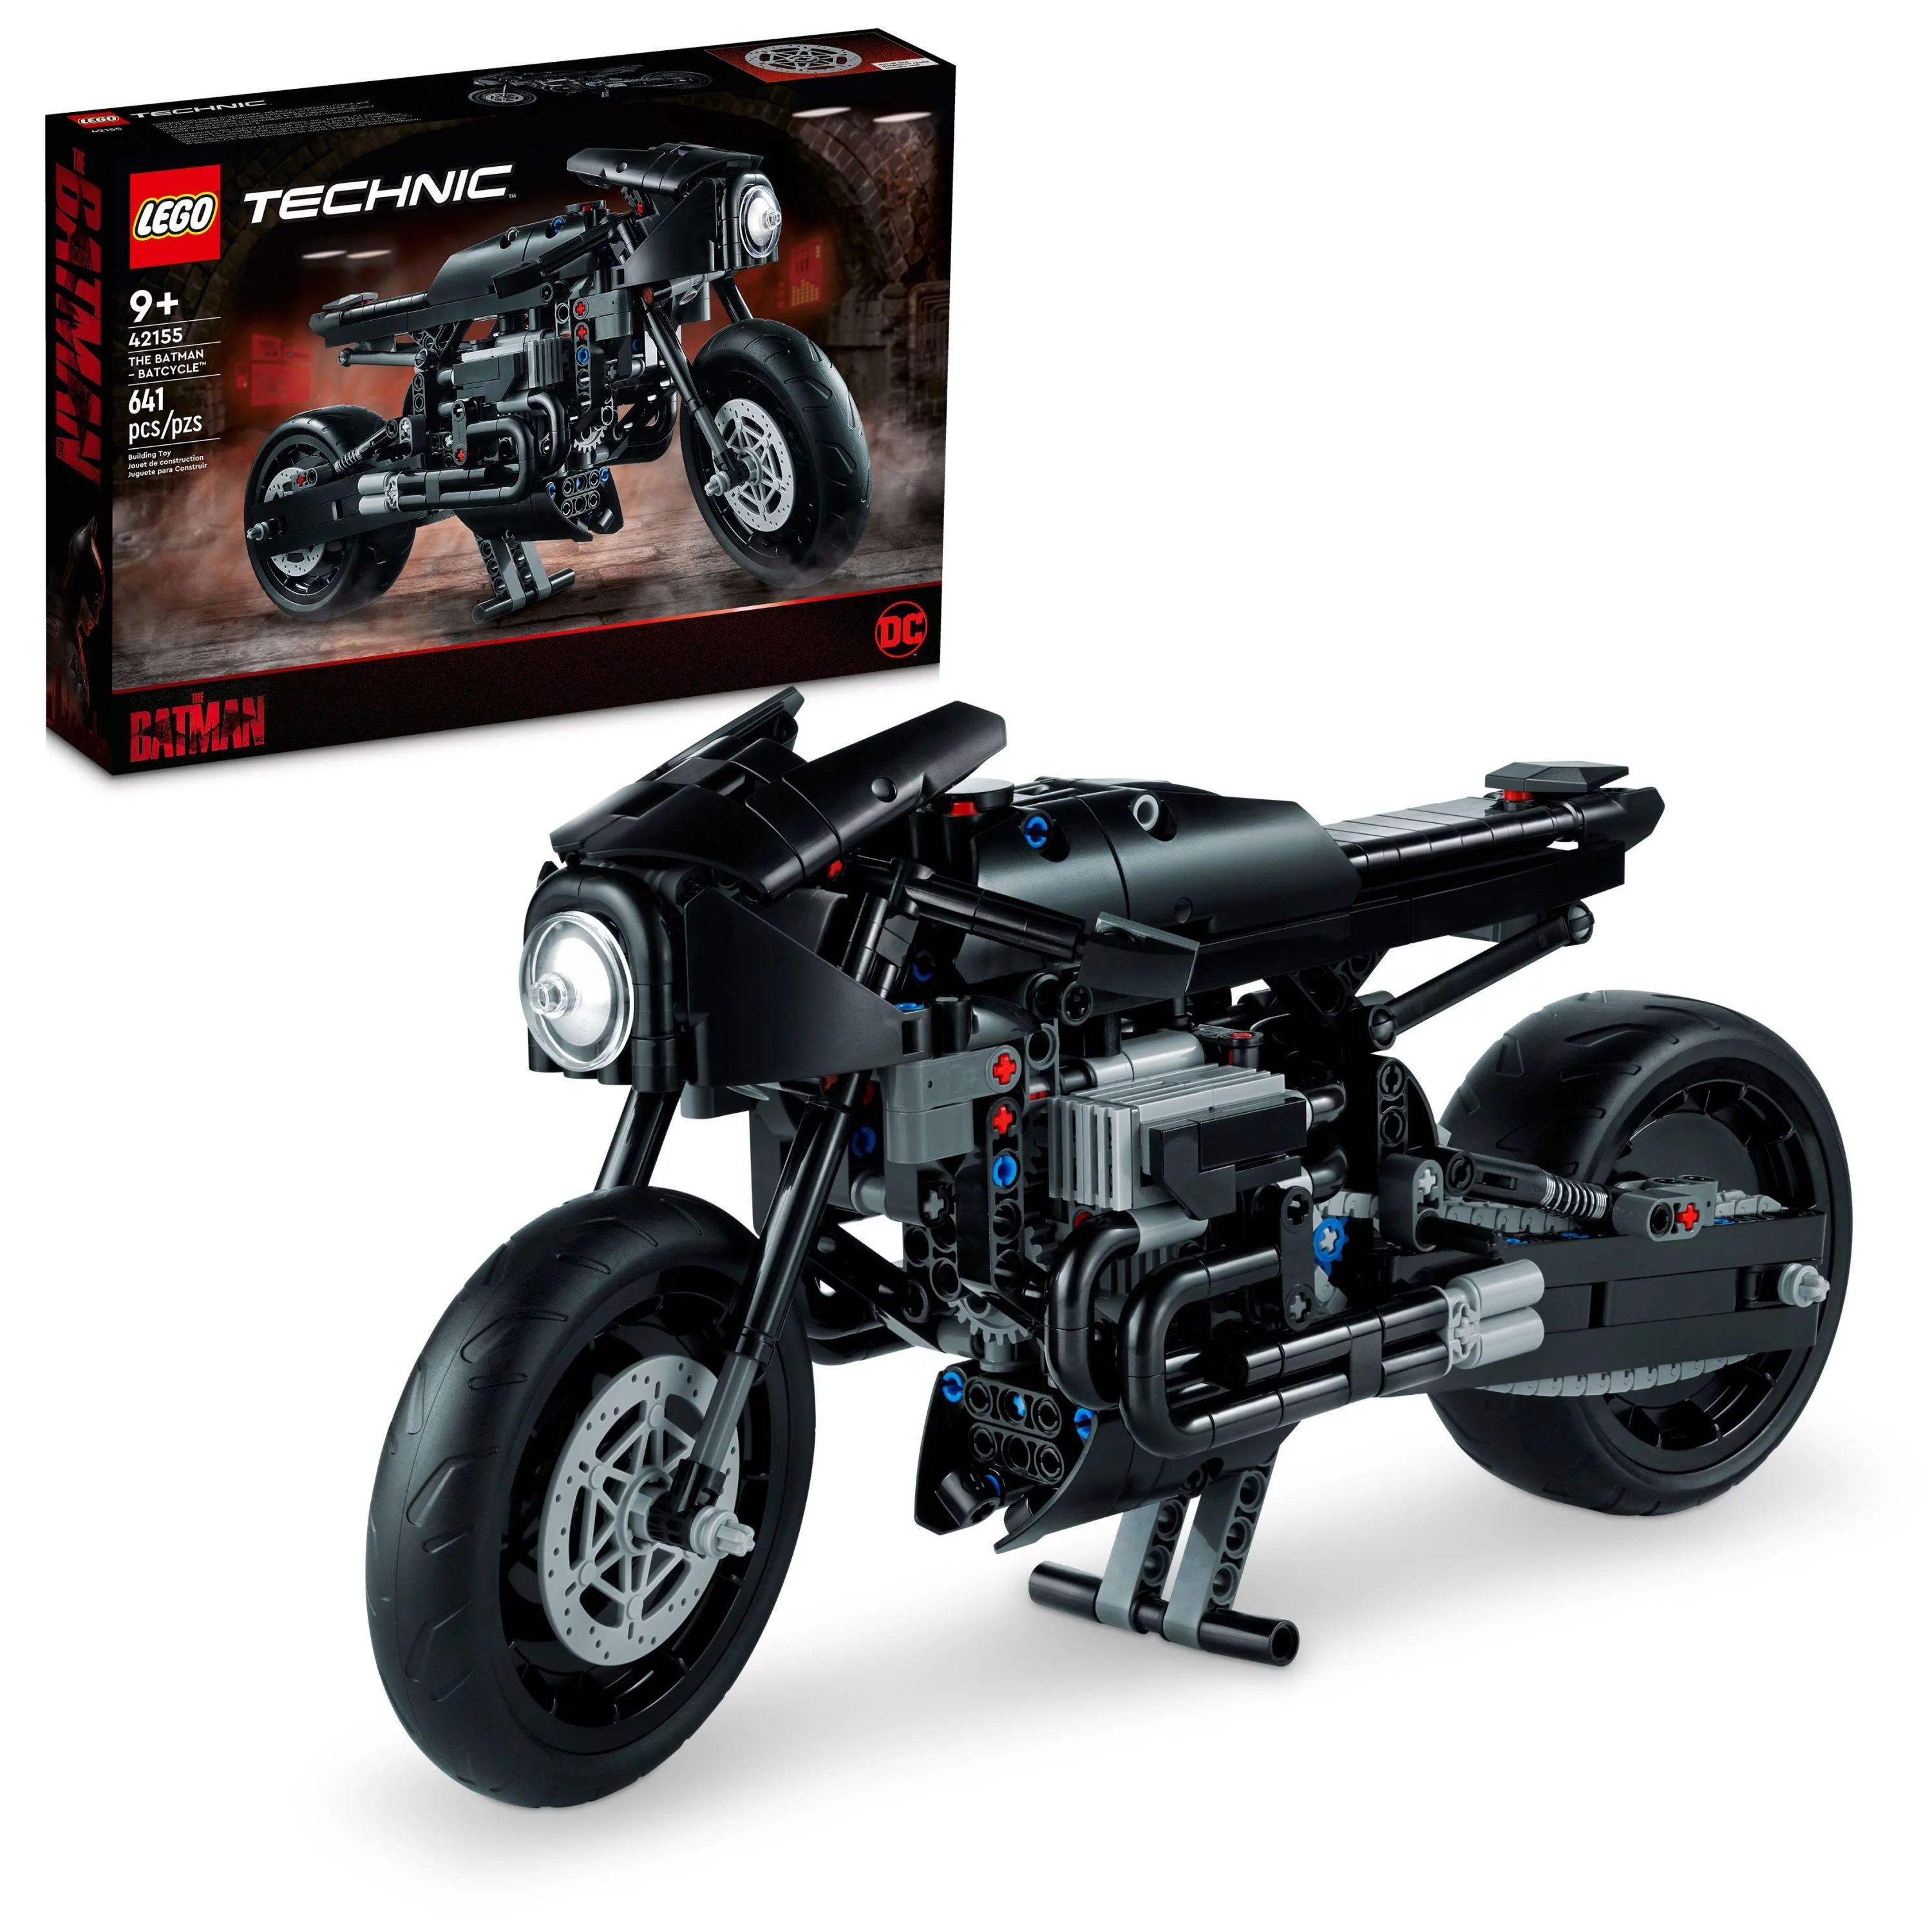 LEGO Technic THE BATMAN – BATCYCLE Set 42155, Collectible Toy Motorcycle, Scale Model Building ... | Walmart (US)